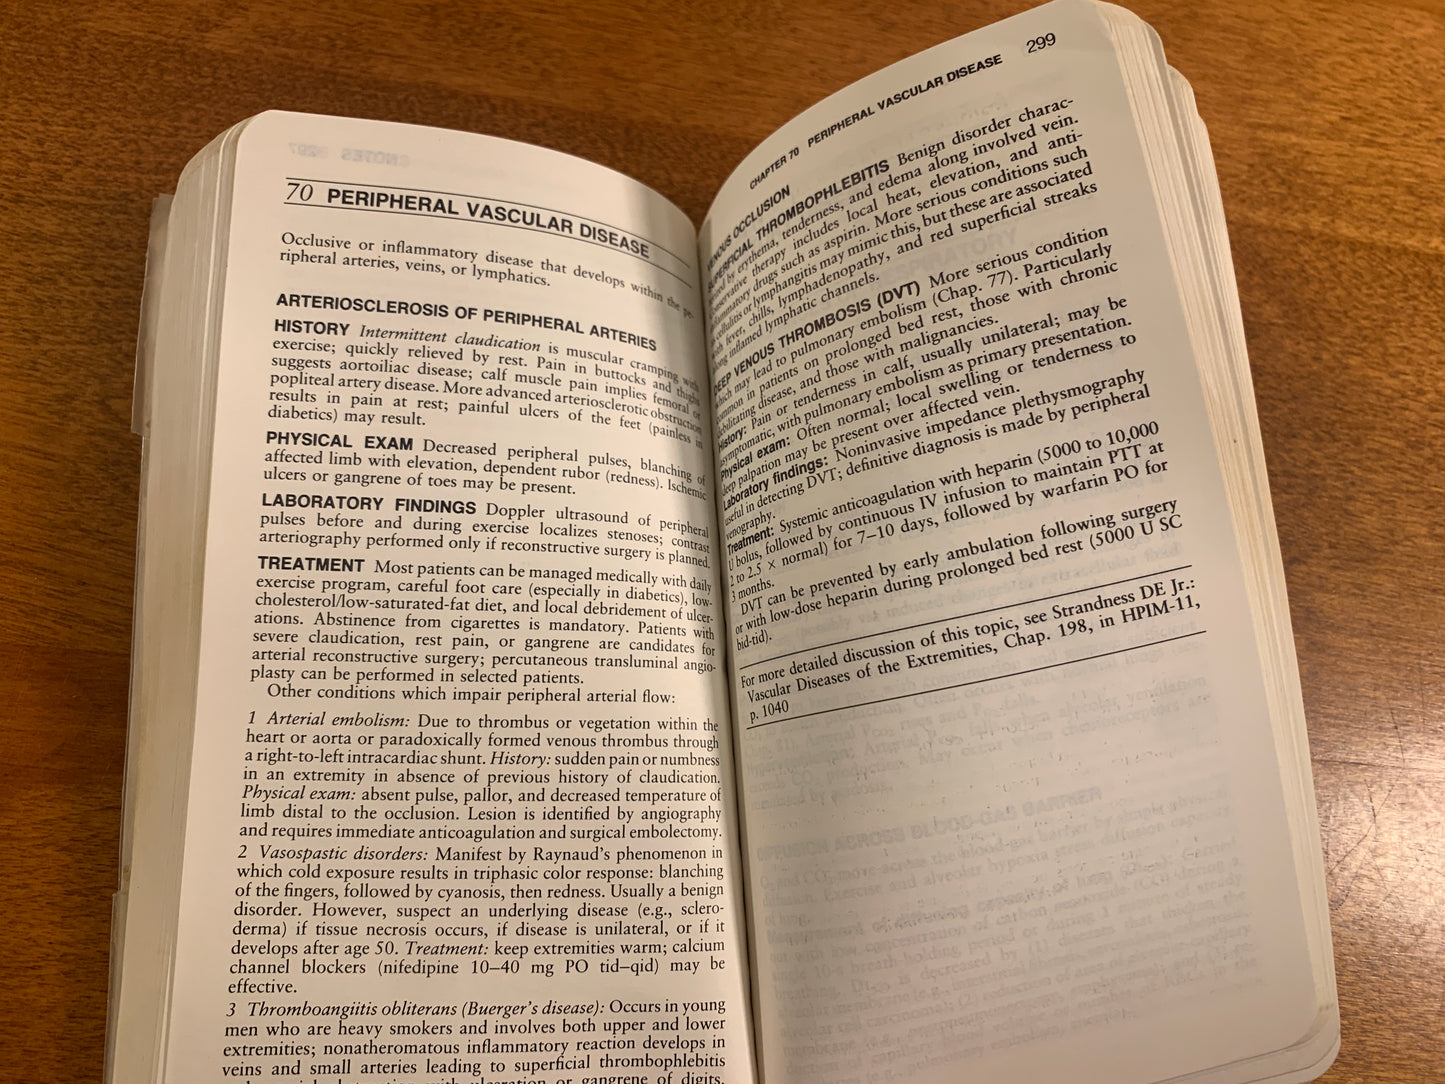 Harrison's Principles of Internal Medicine [11th Edition, Companion Handbook]